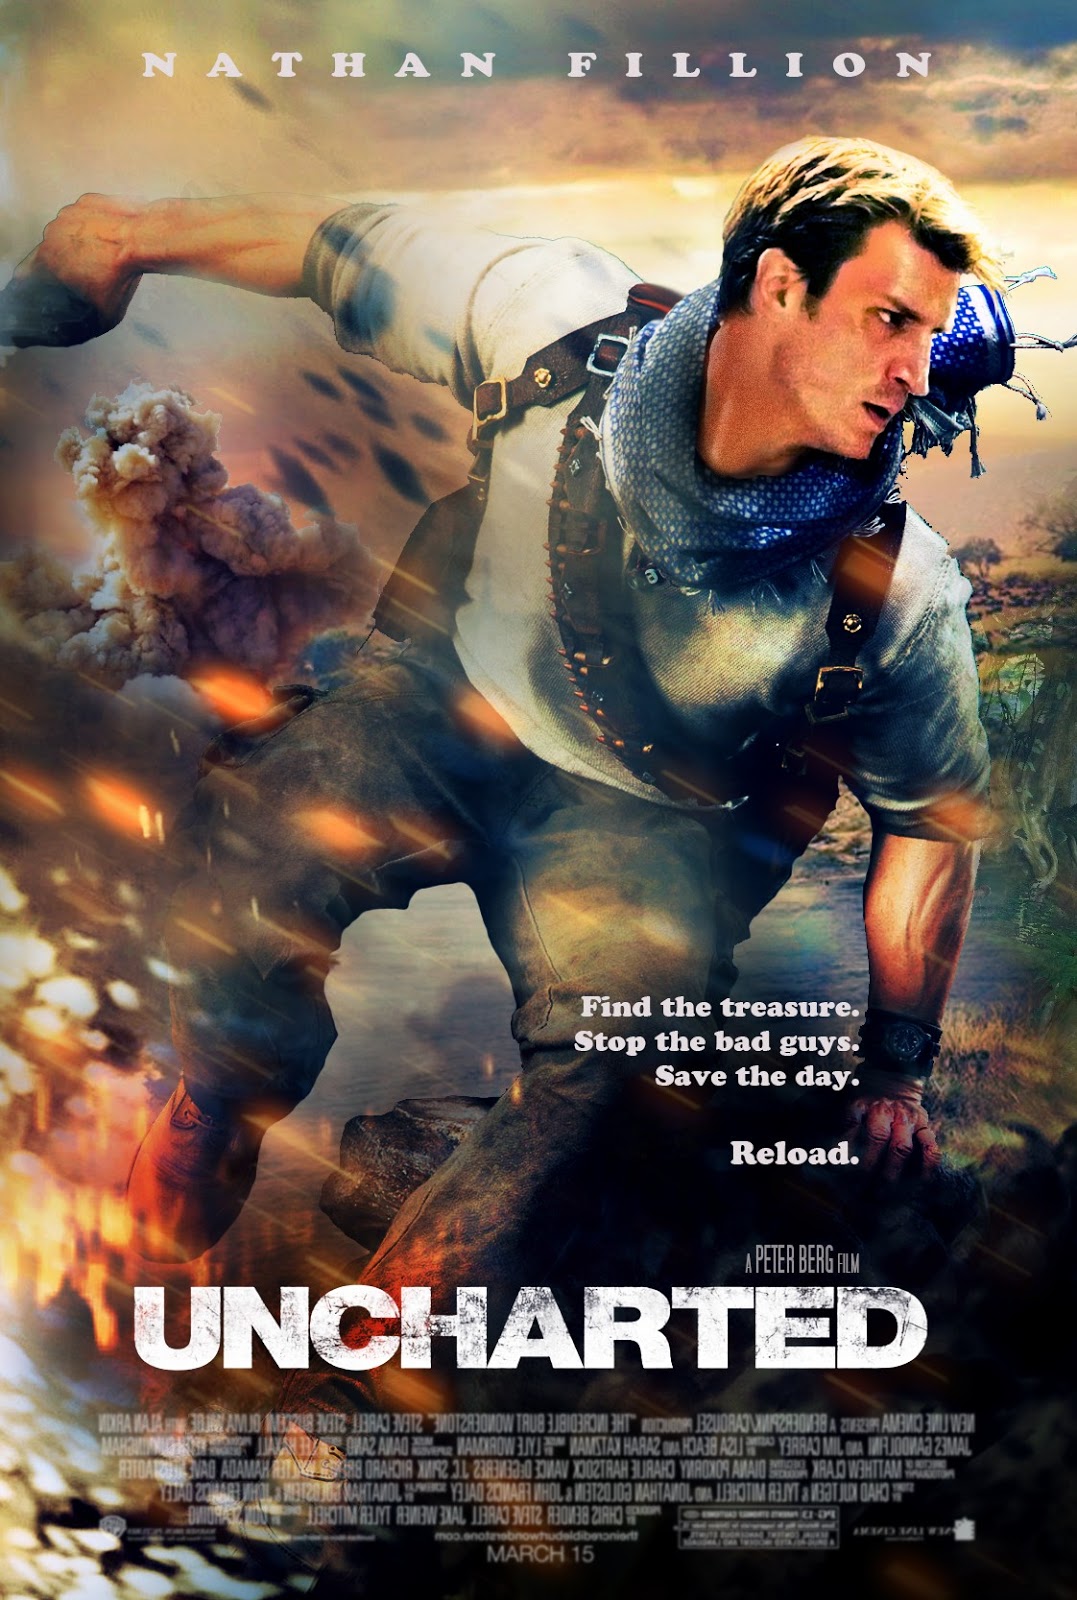 Uncharted trailer